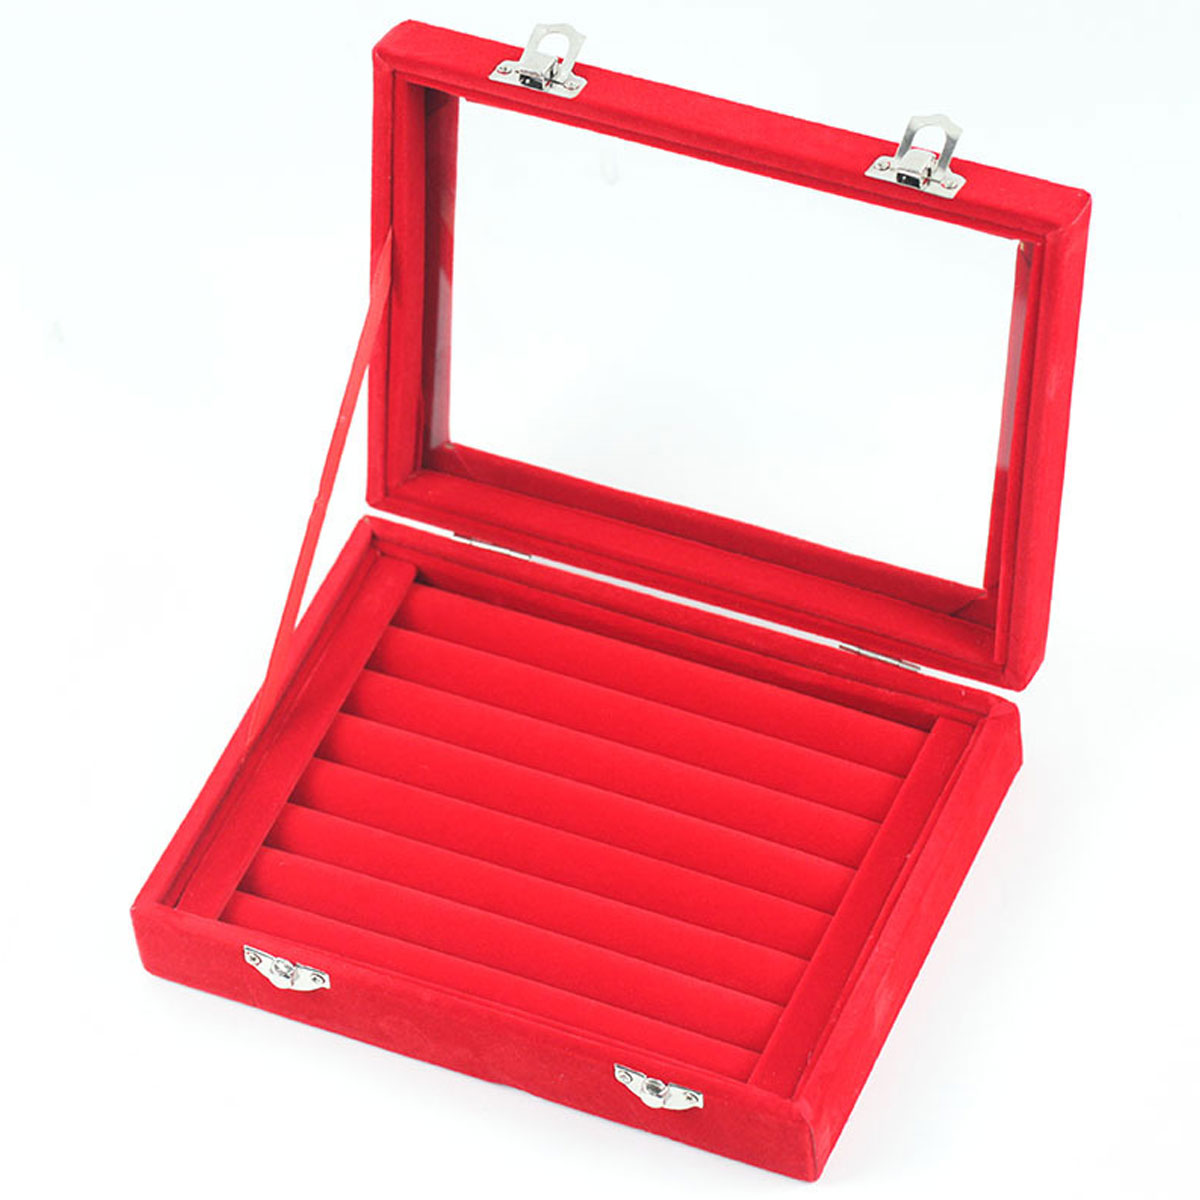 Jewelry-Velvet-Wood-Ring-Display-Organizer-Box-Tray-Holder-Earring-Storage-Case-1589869-5